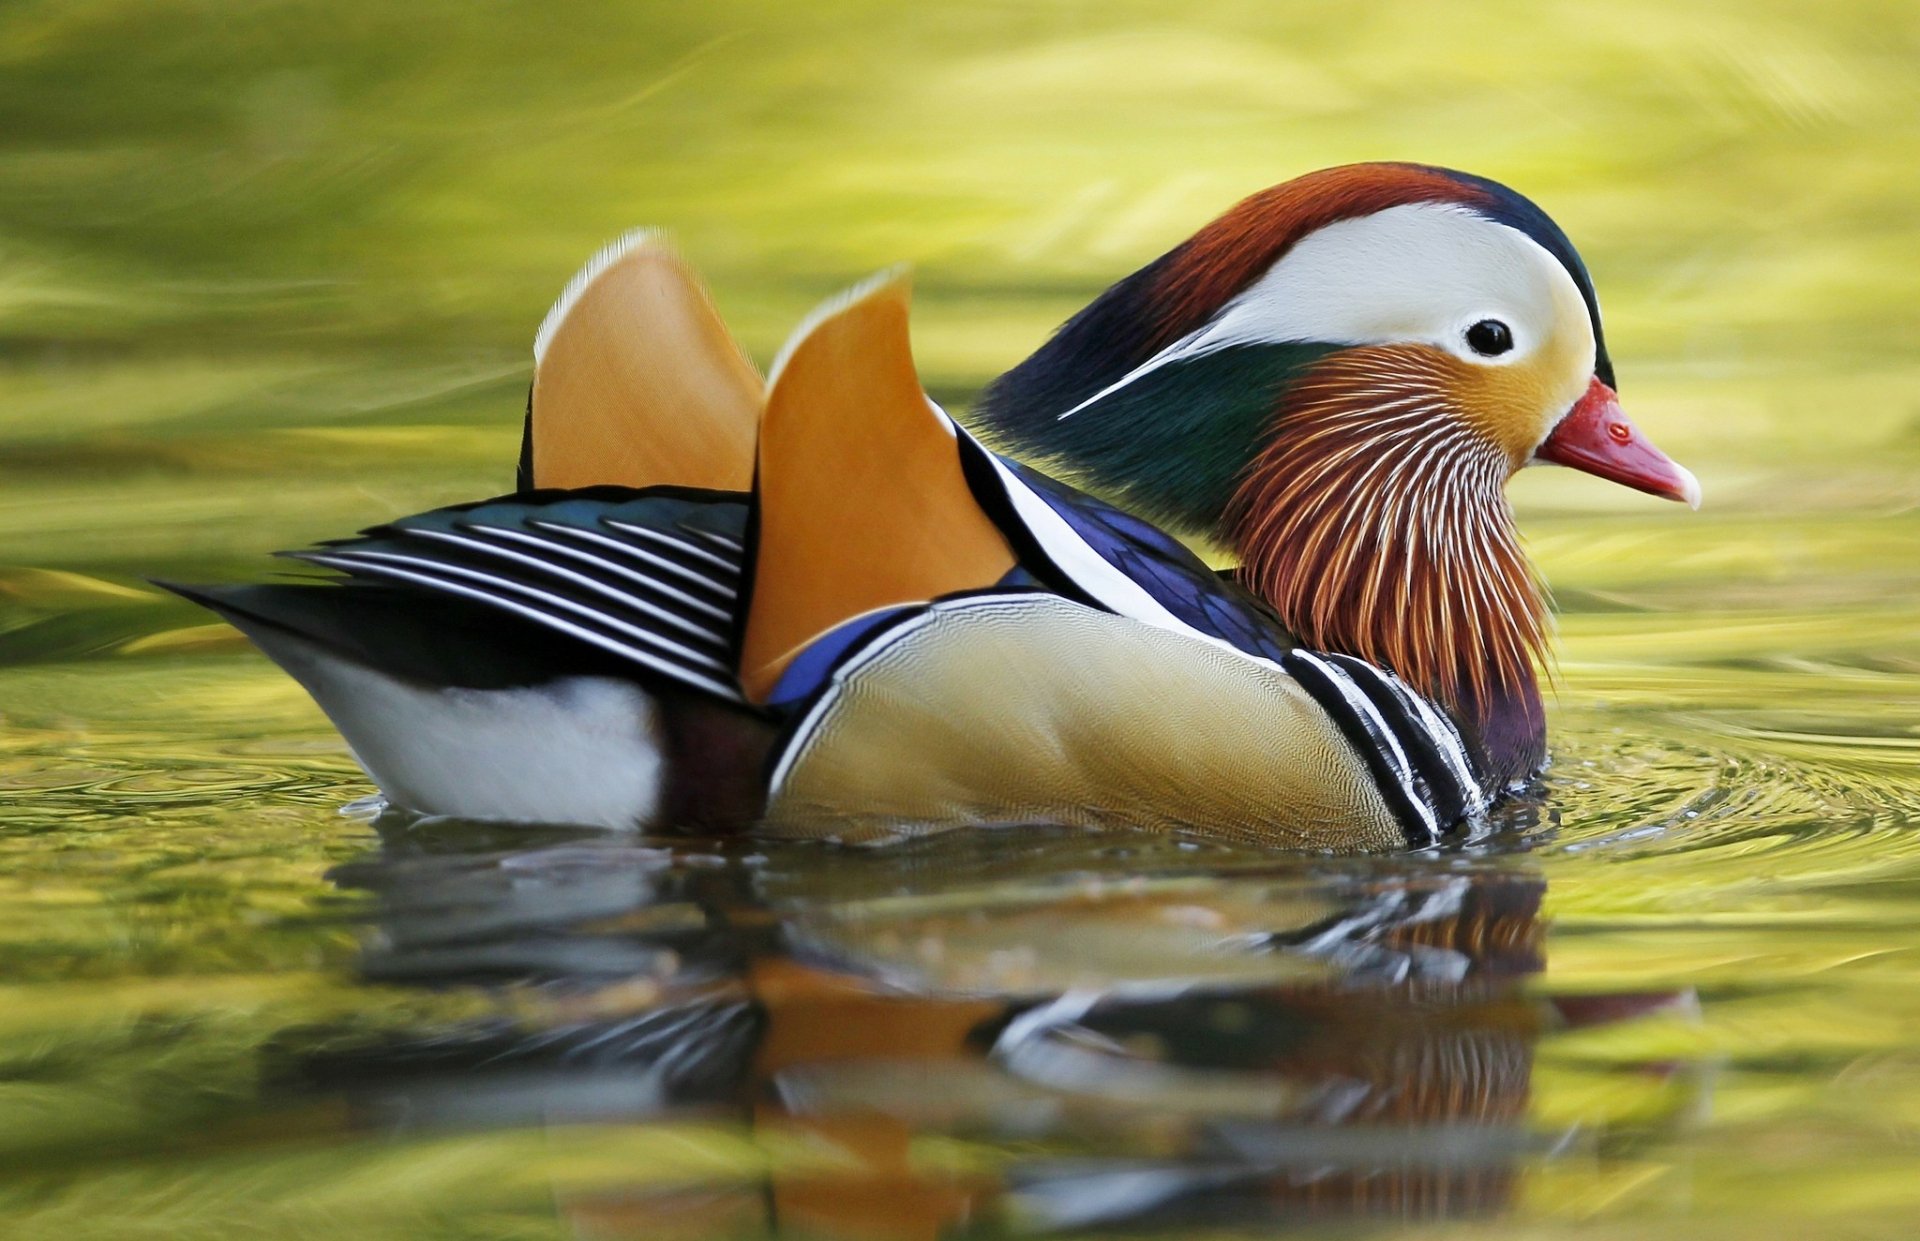 Mandarin Duck Full HD Wallpaper and Background Image | 2048x1324 | ID